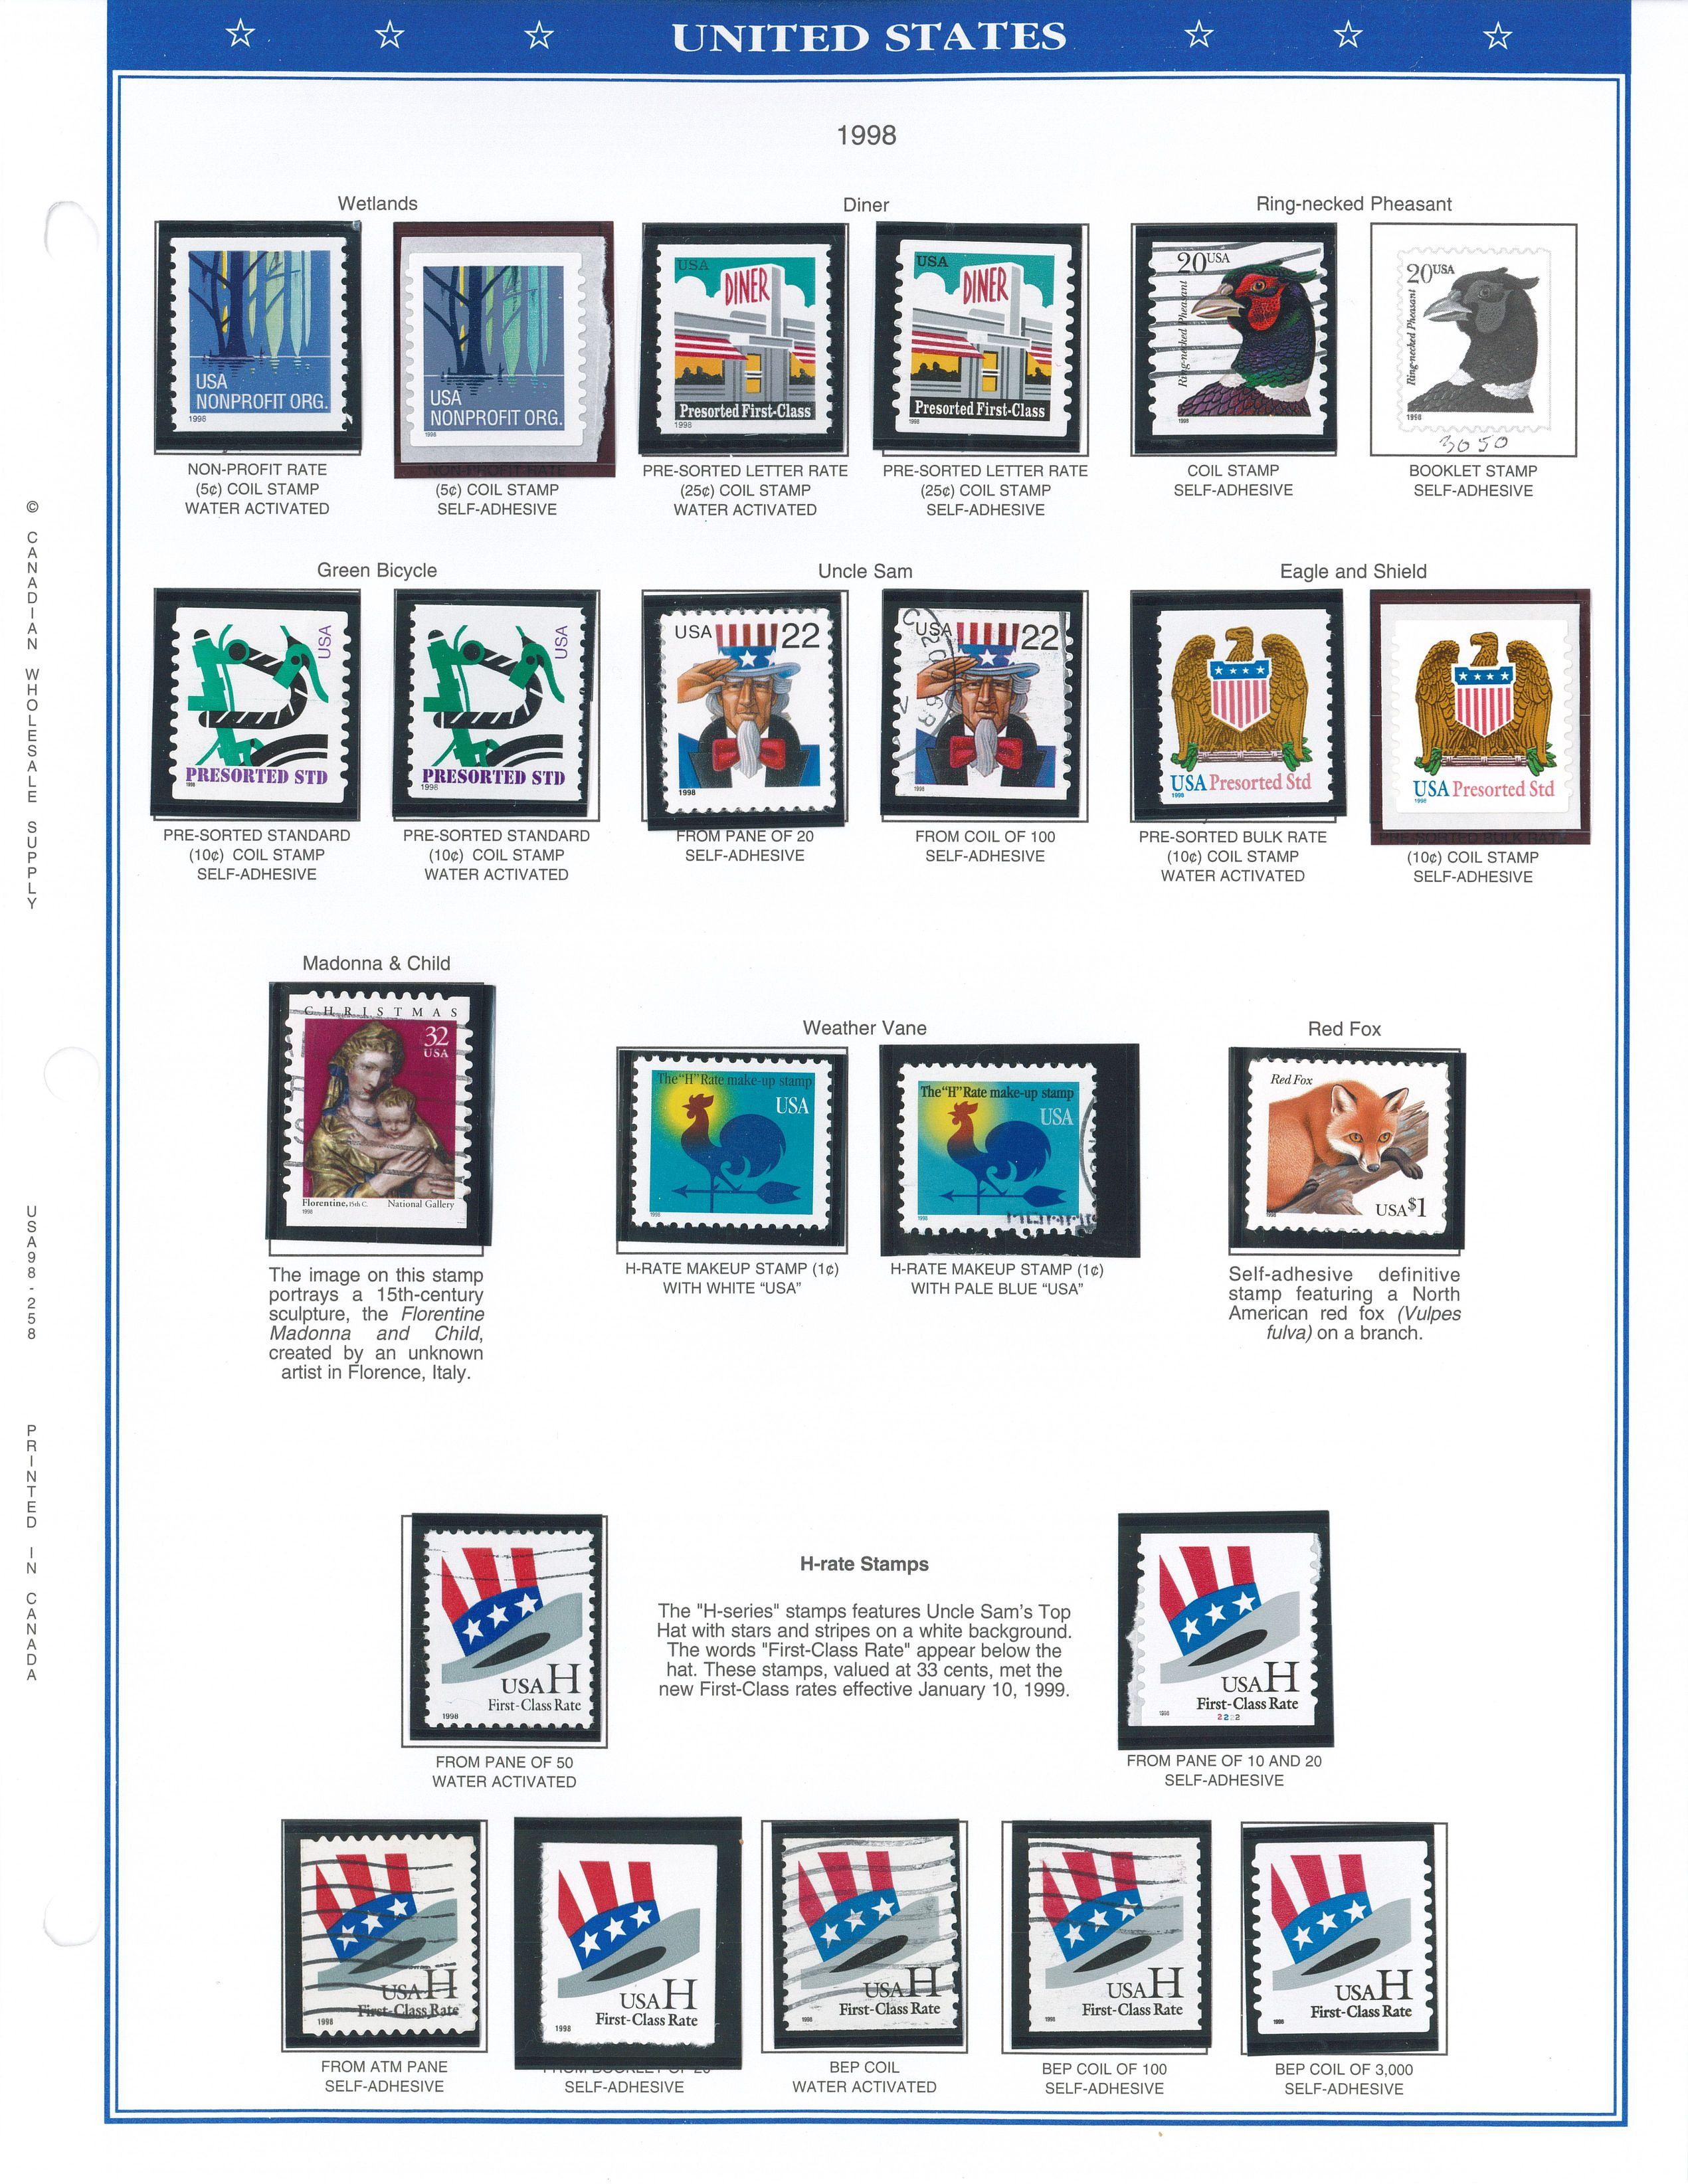 Binder of USA Stamps (1996-2000)